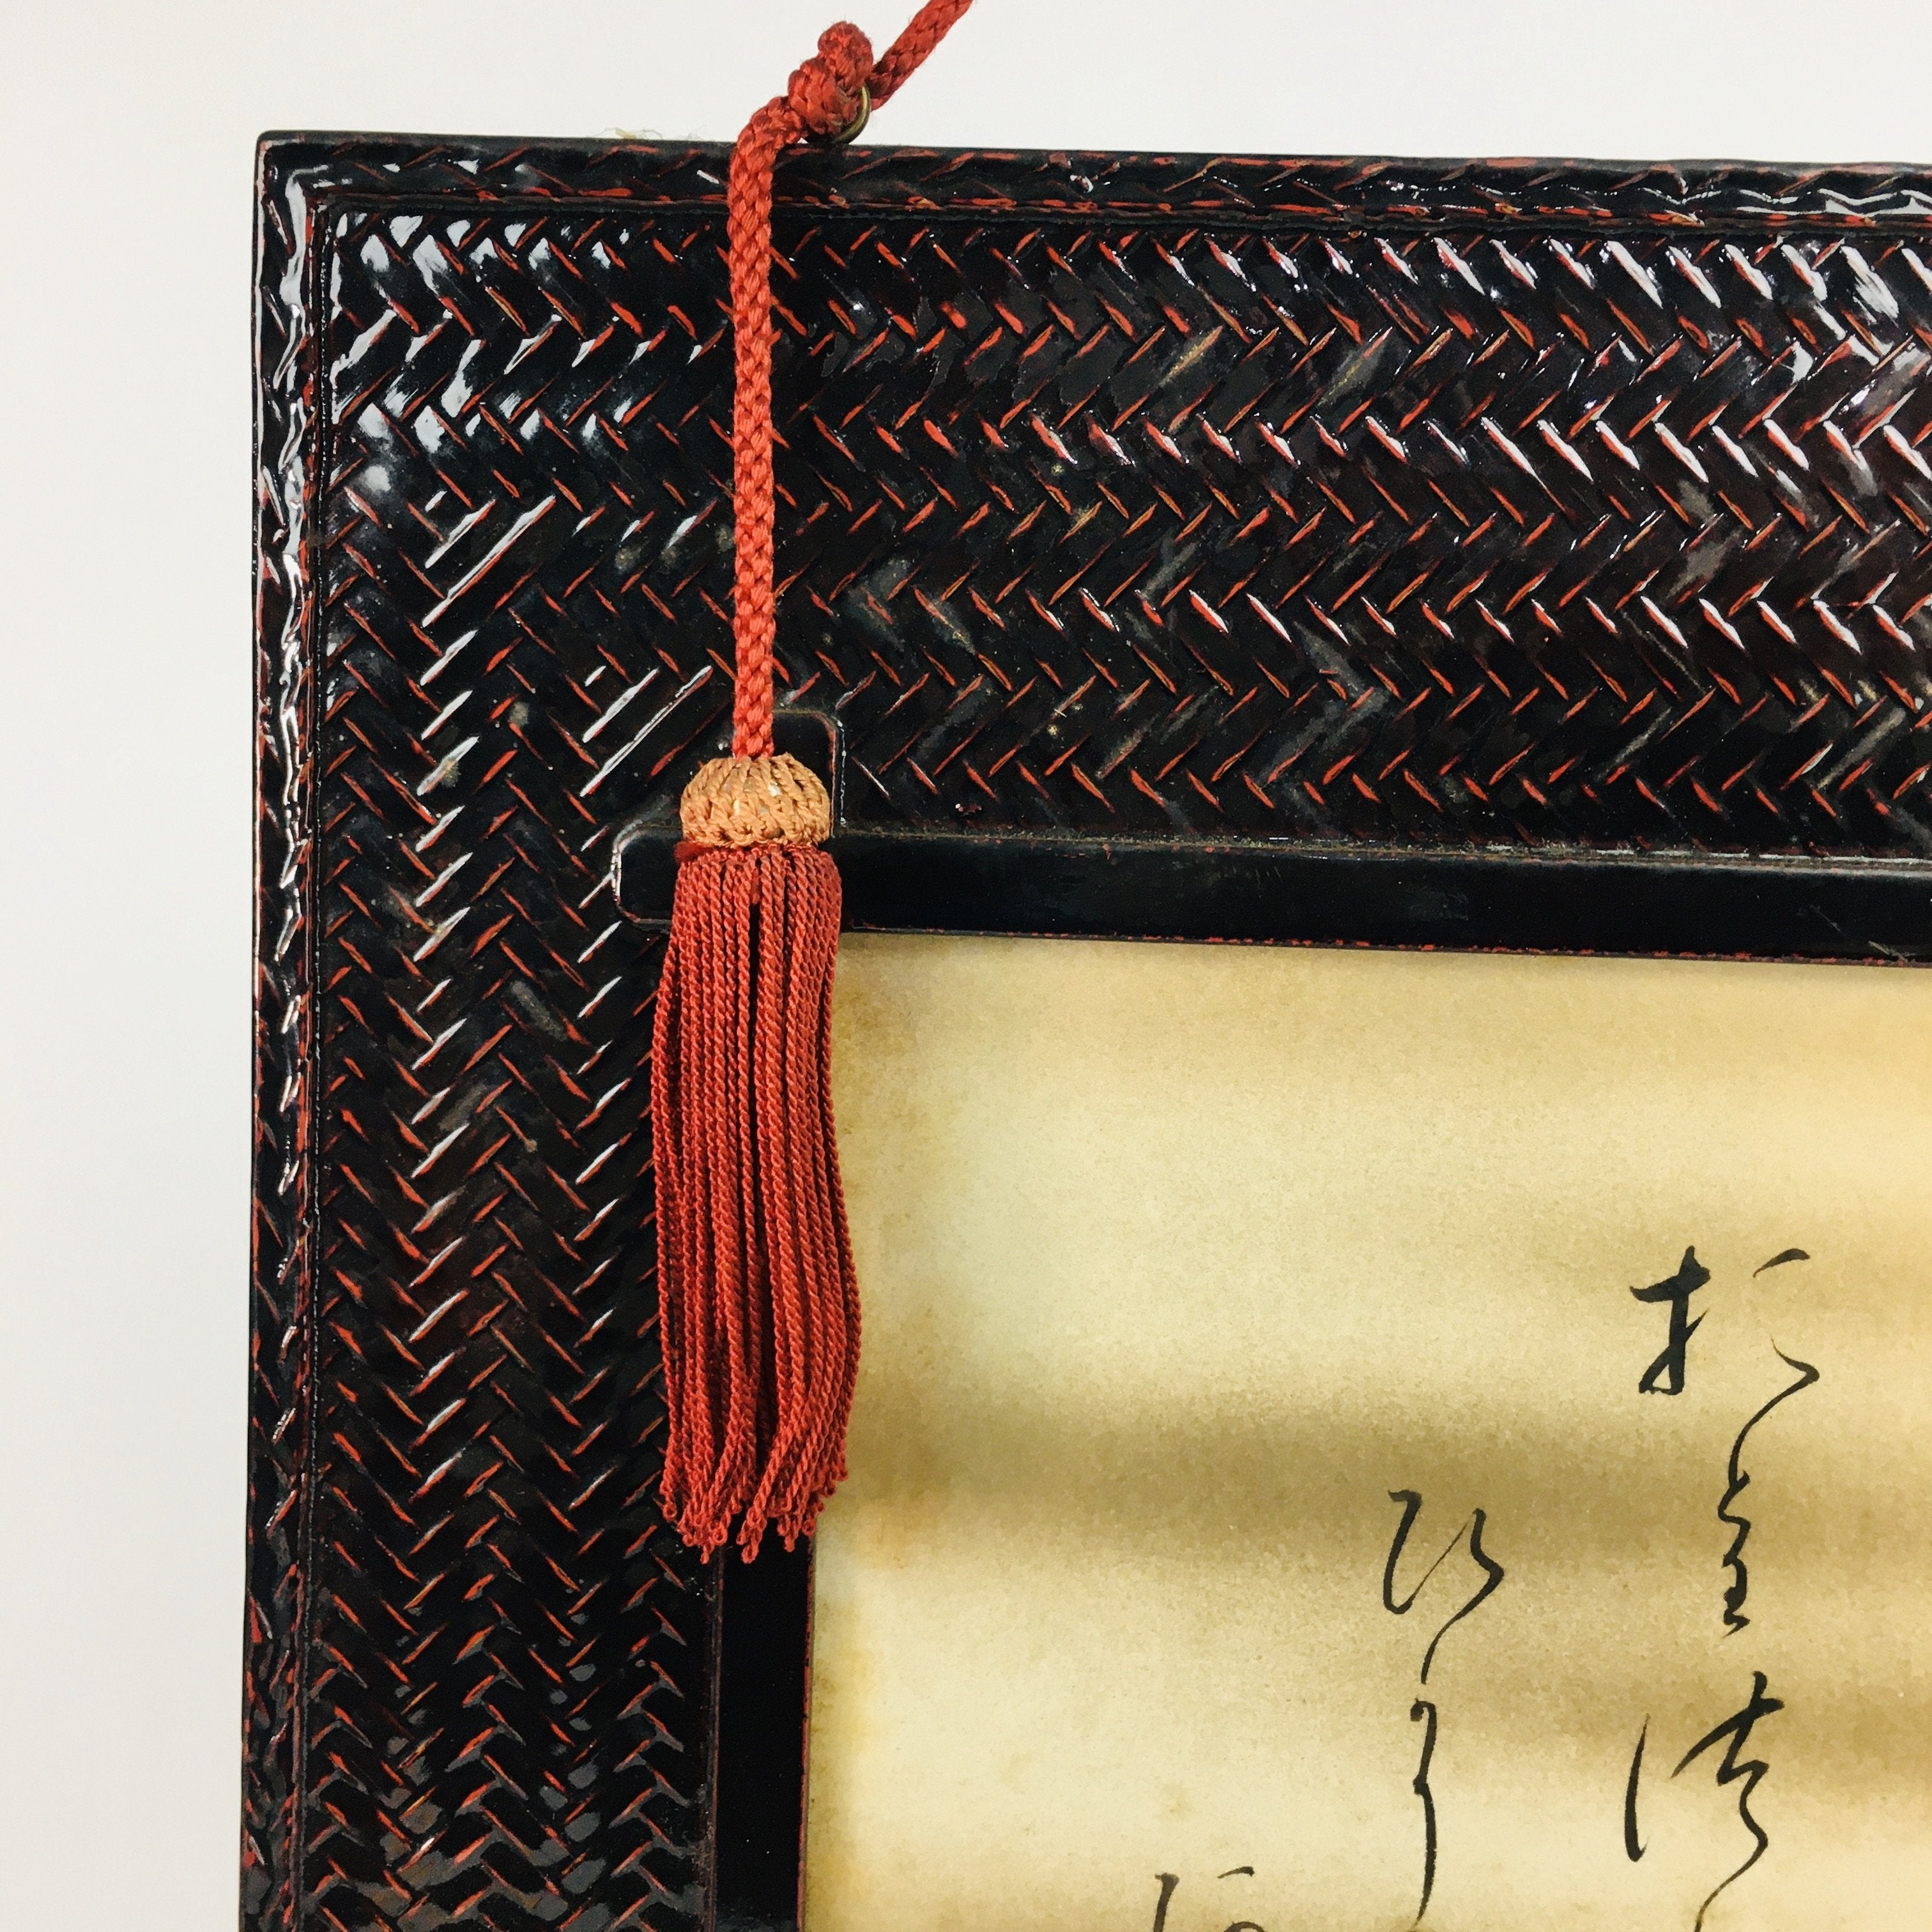 Japanese Lacquered Wall Hanging Art Vtg Framed Display Tanka Japanese Poem FL8